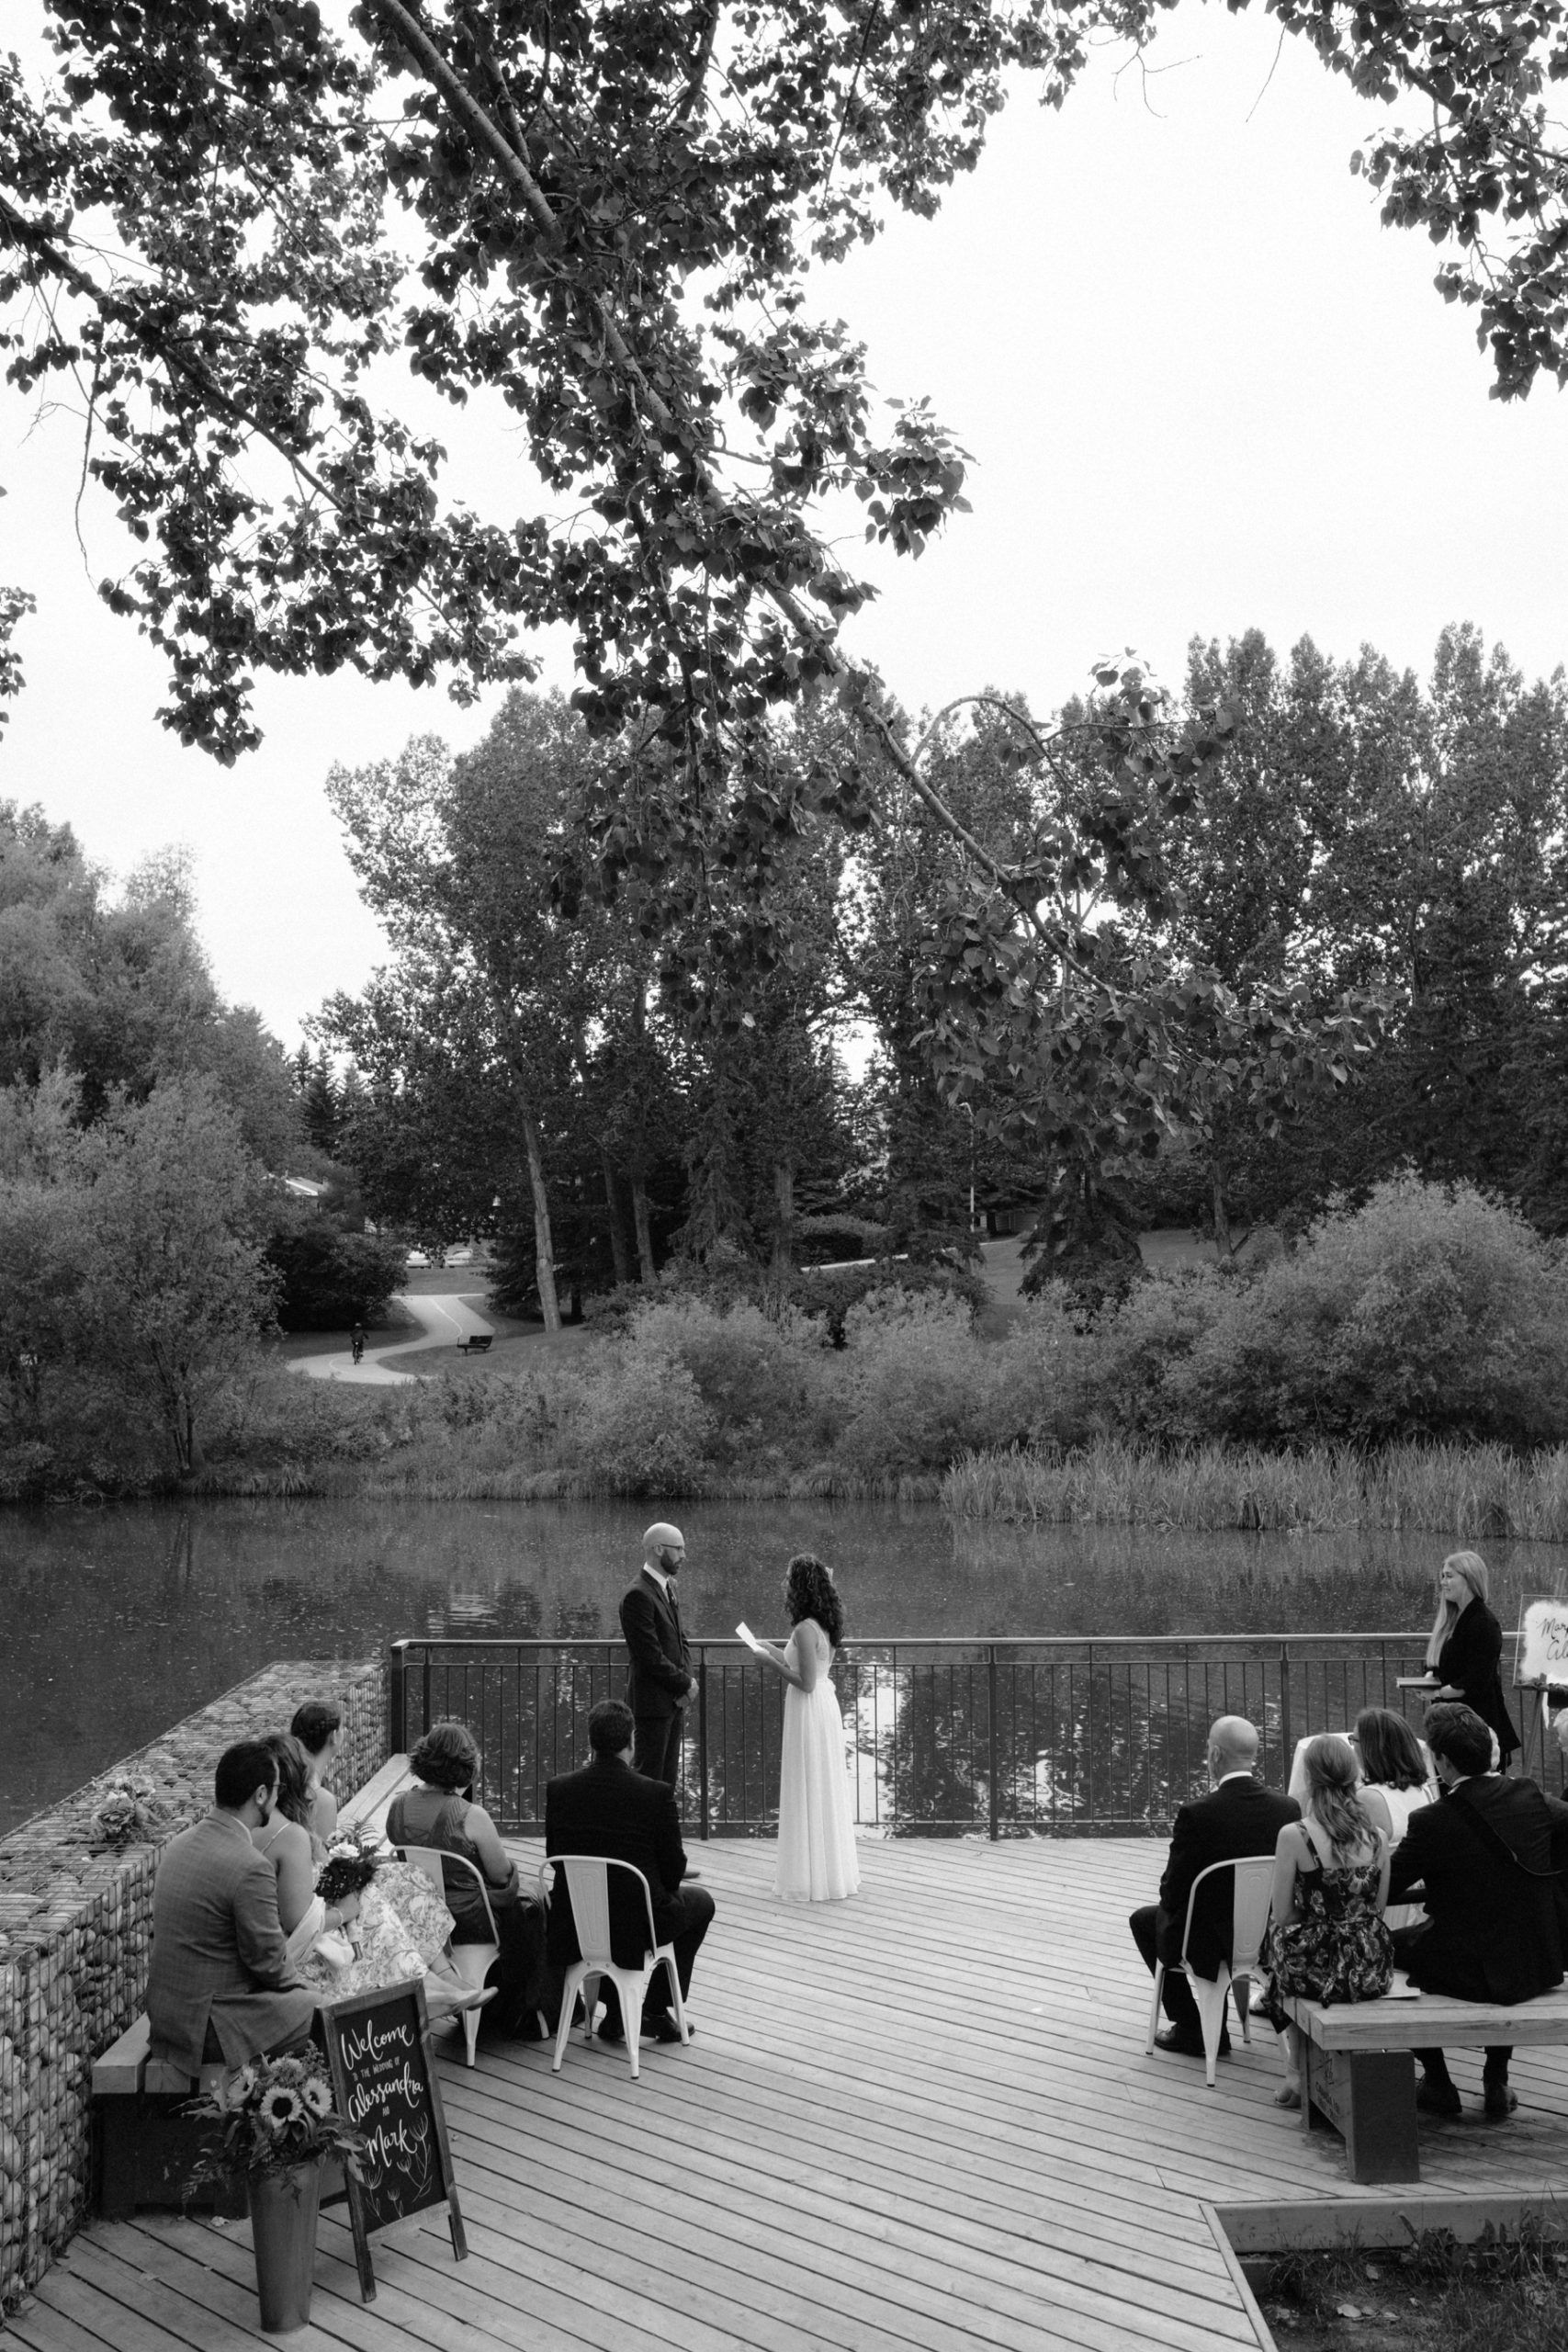 COVID abiding small wedding ceremony in the heart of Calgary at Confederation Park